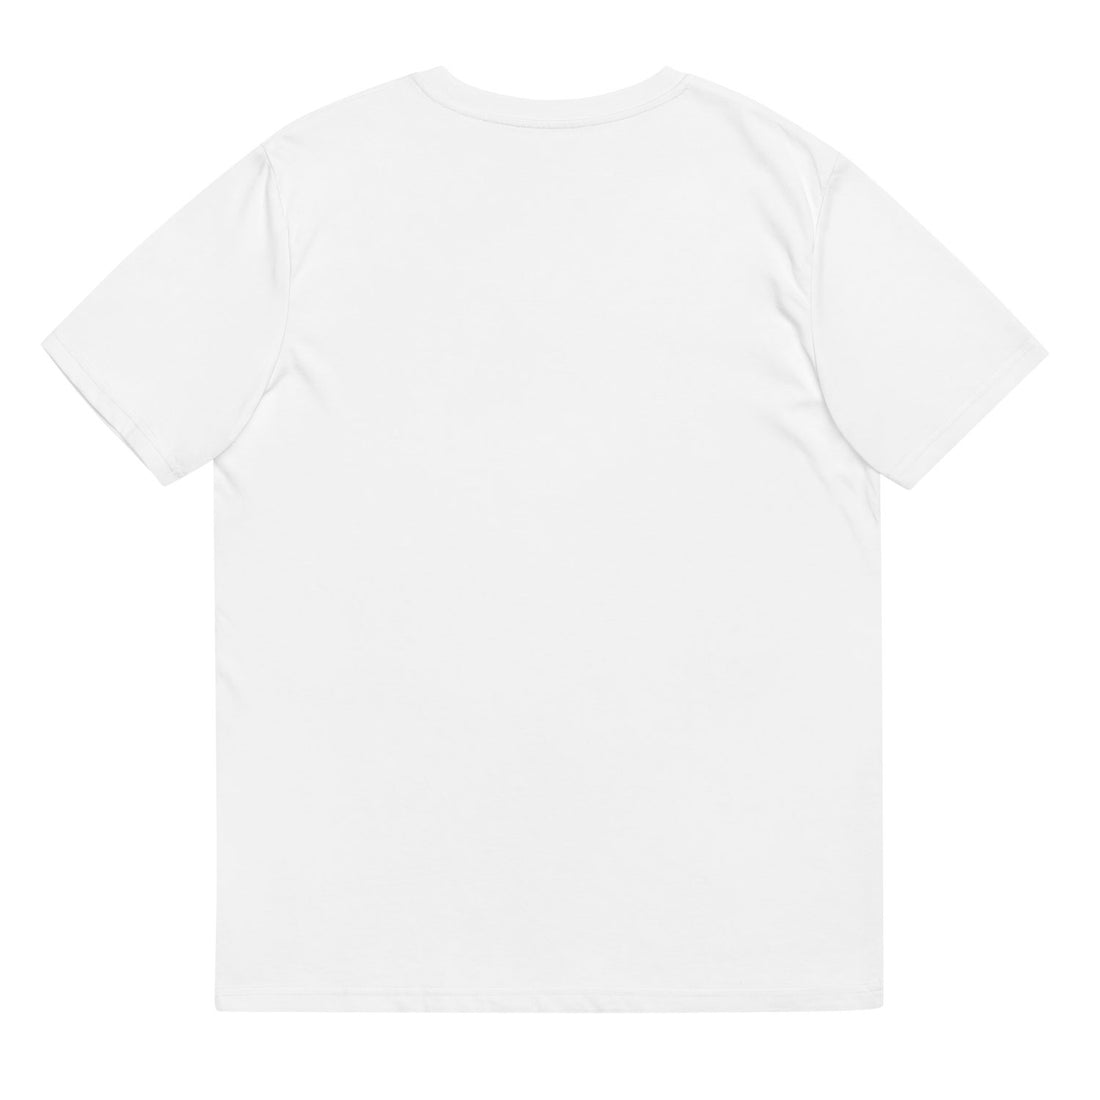 uniswap logo tshirt white